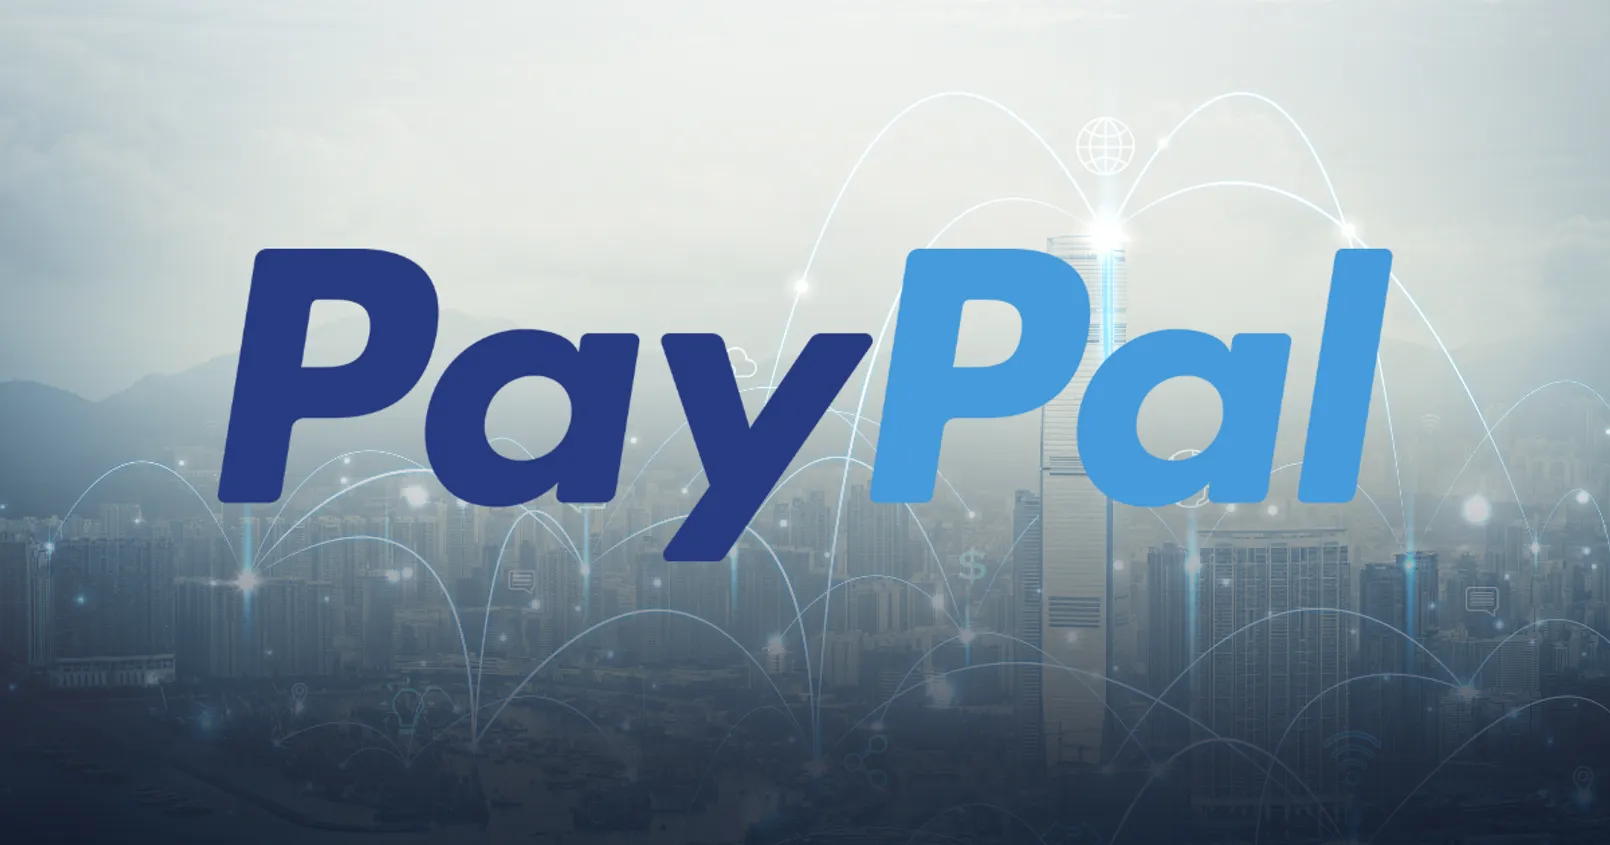 PayPal ลุยต่อ! พบเข้าลงทุนใน ‘Magic’ บ.วอลเล็ทคริปโตฝั่งธุรกิจ คาดเล็งหยิบให้ลูกค้าใช้งาน